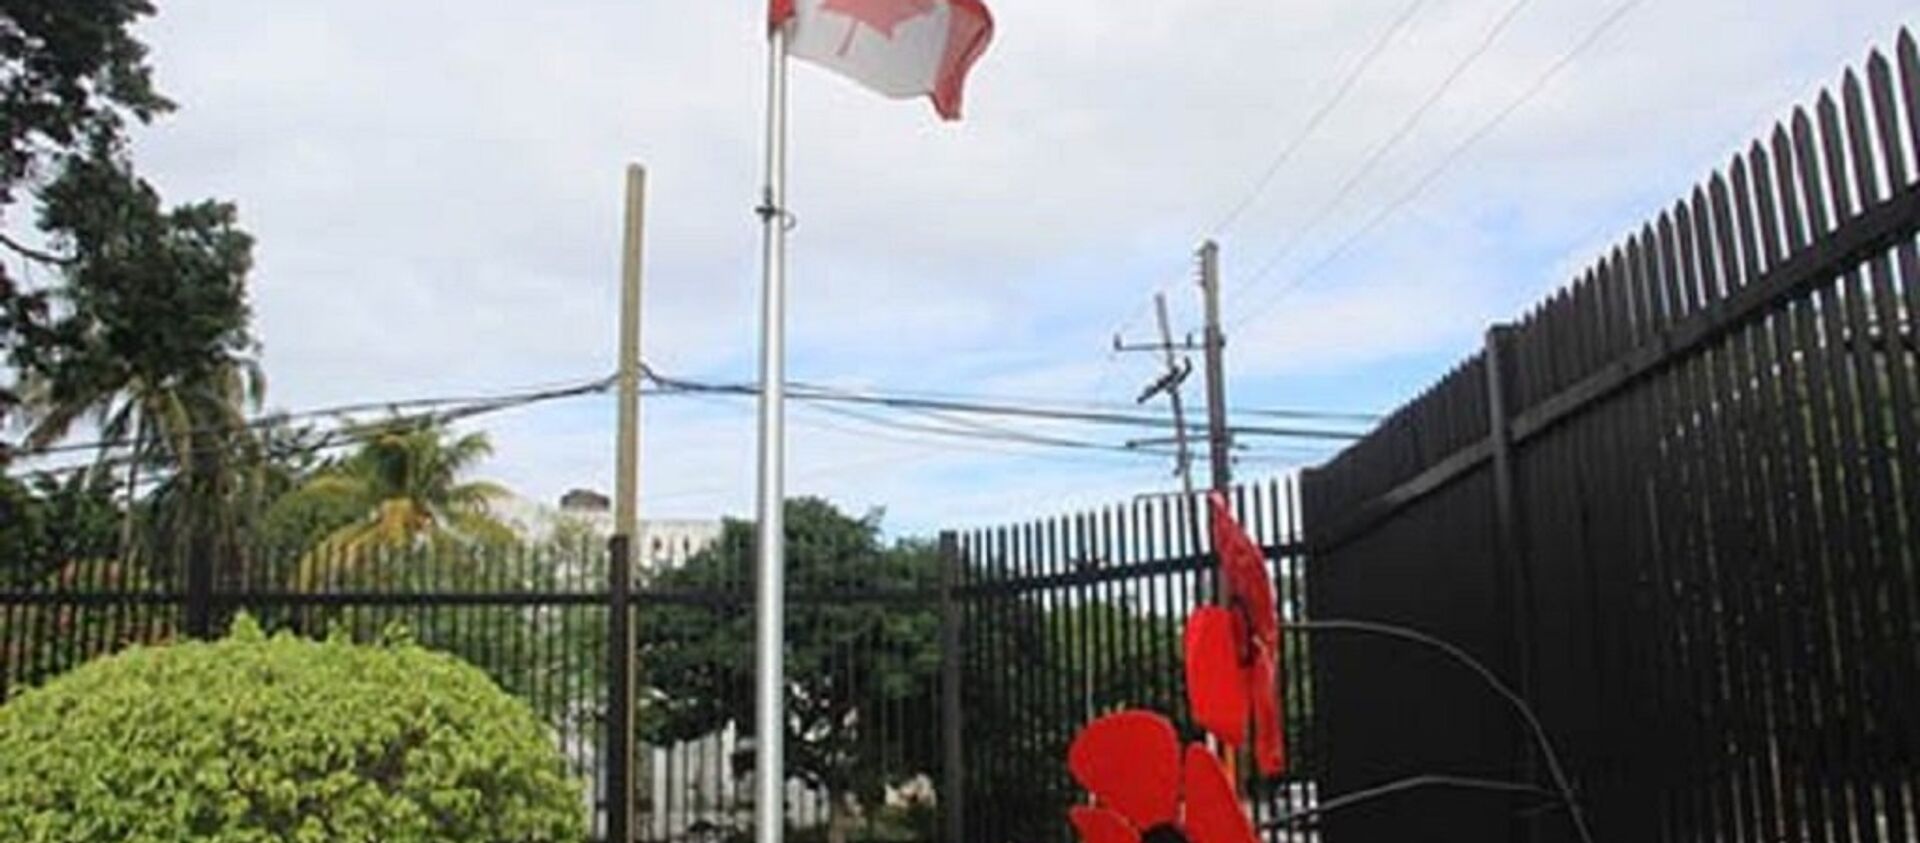 Canadian embassy on Cuba - Sputnik International, 1920, 19.11.2018